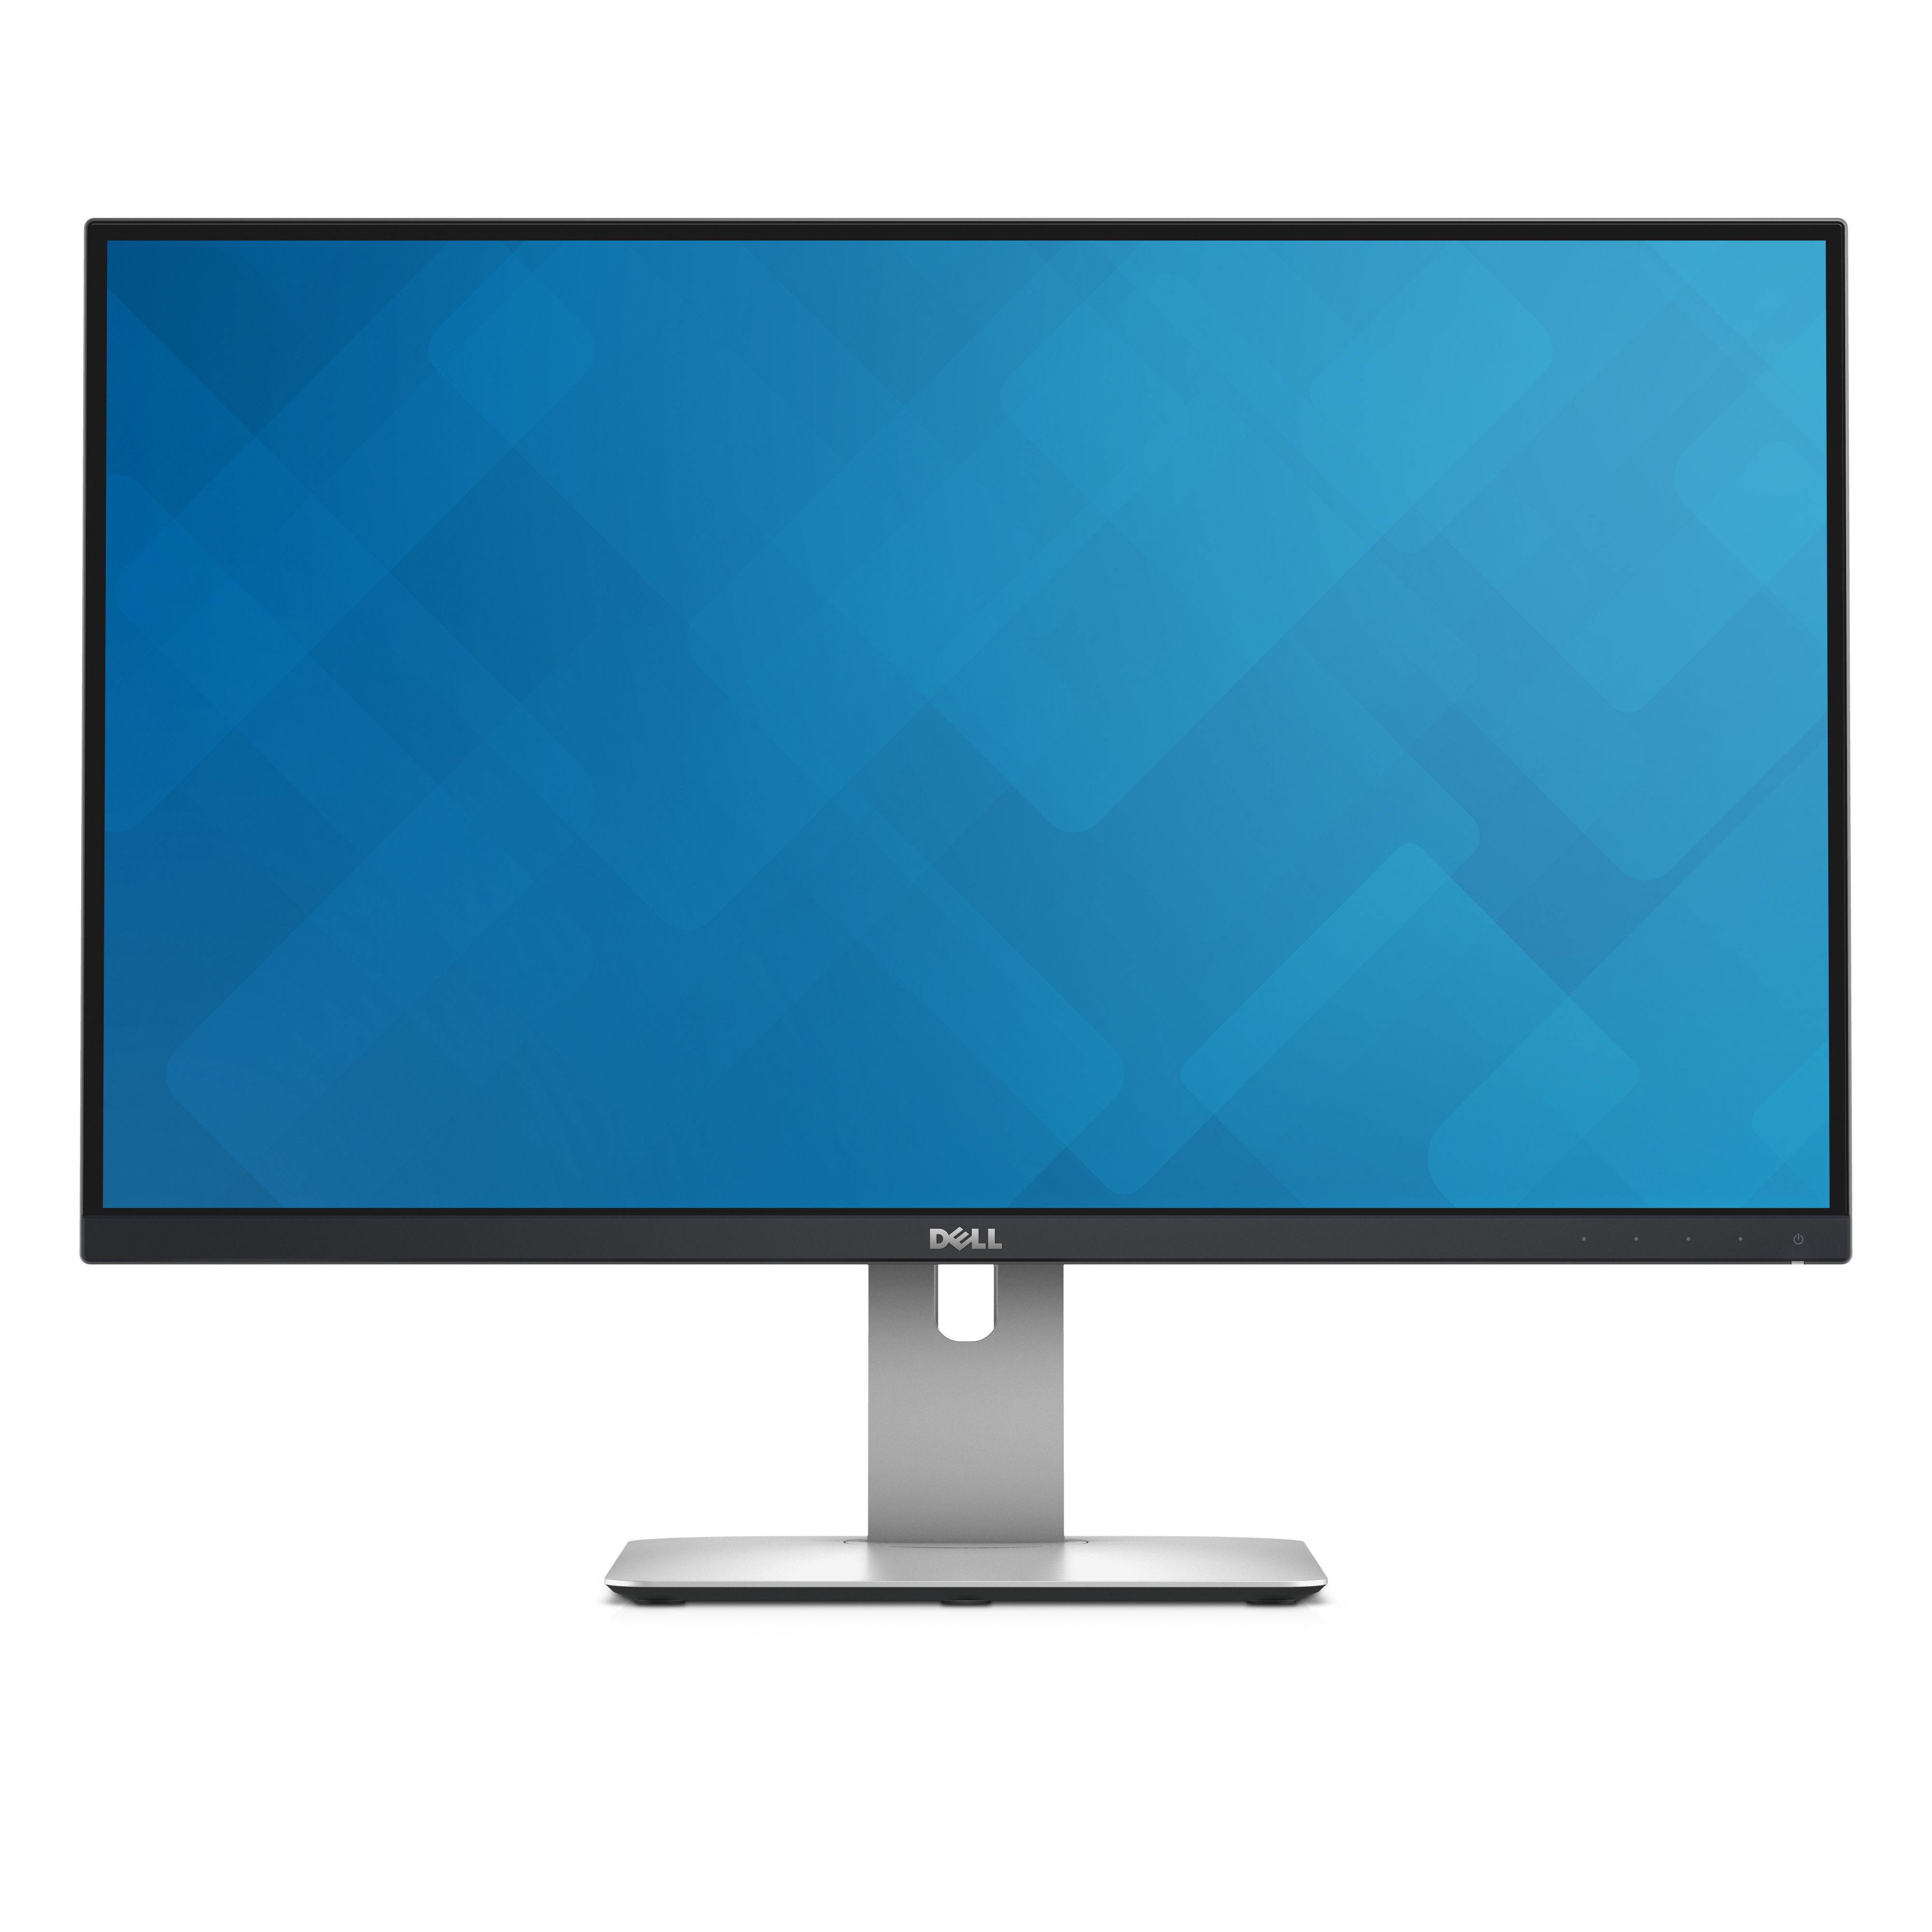 DELL UltraSharp U2715H computer monitor